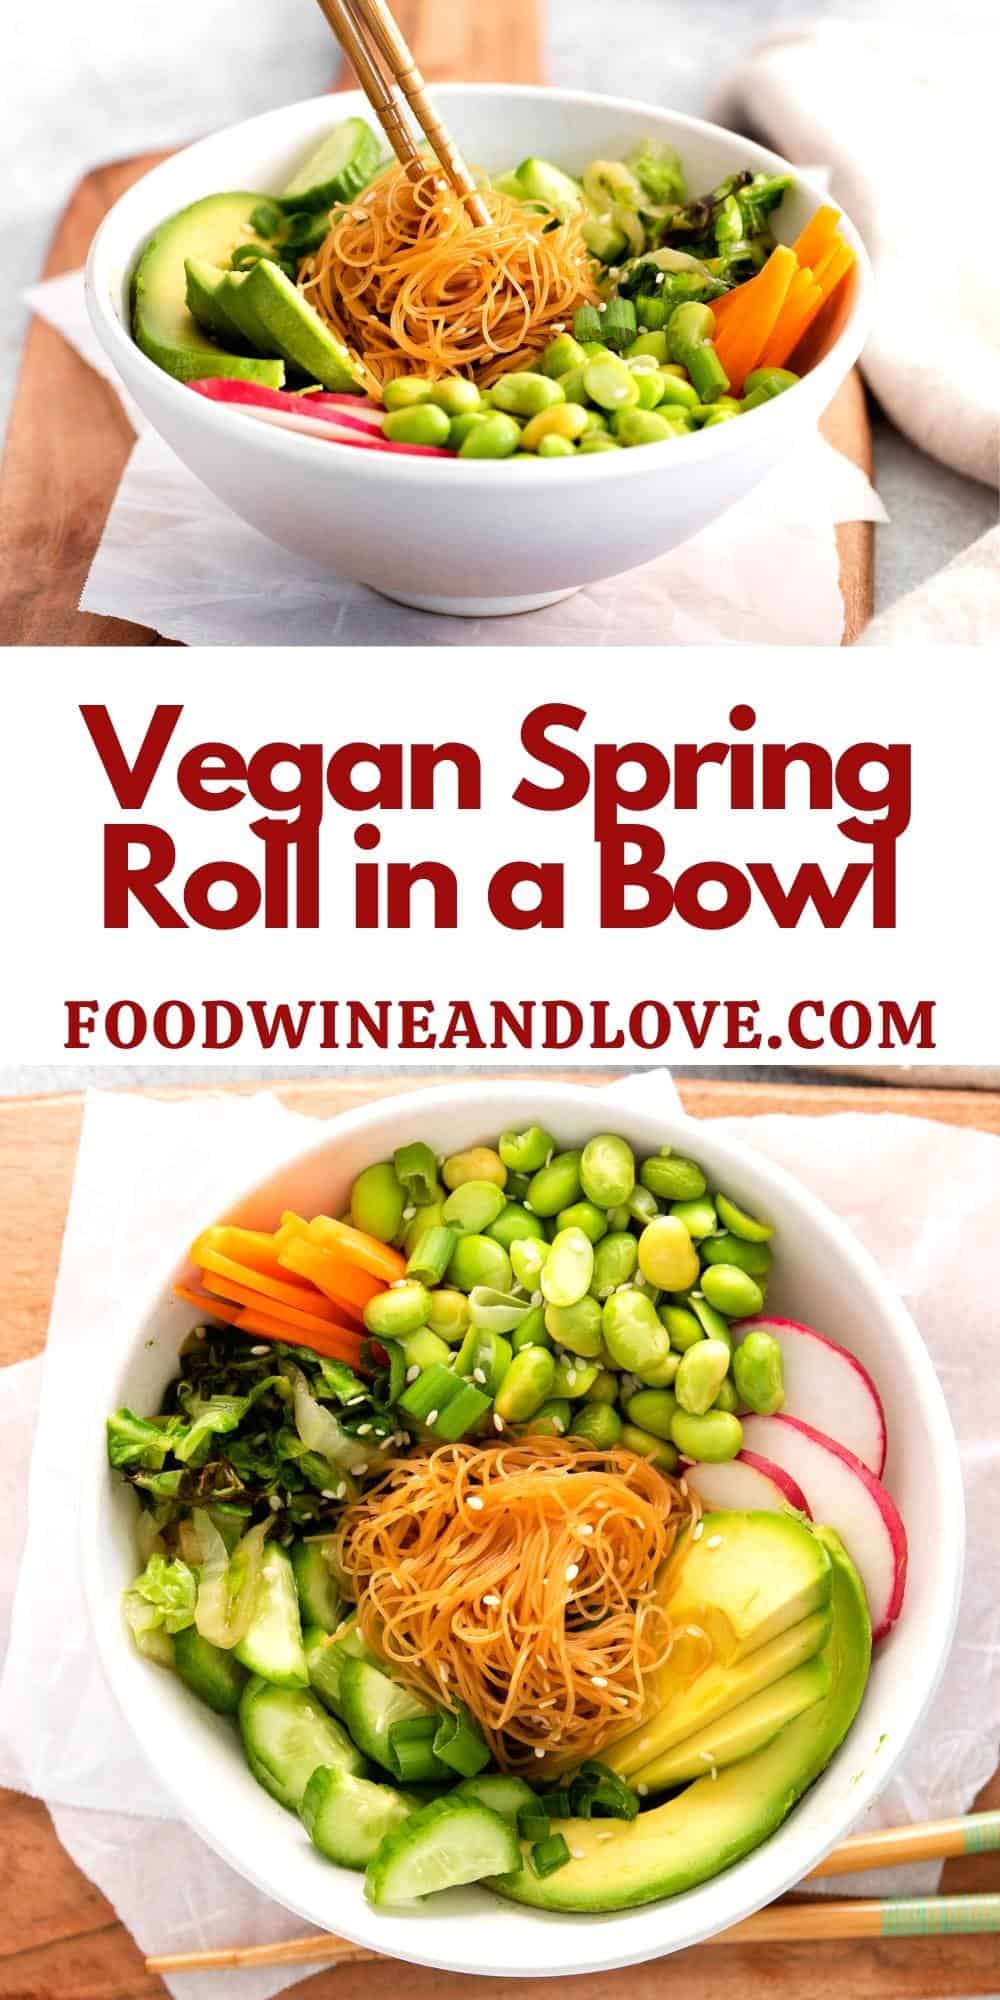 Vegan Spring Roll in a Bowl